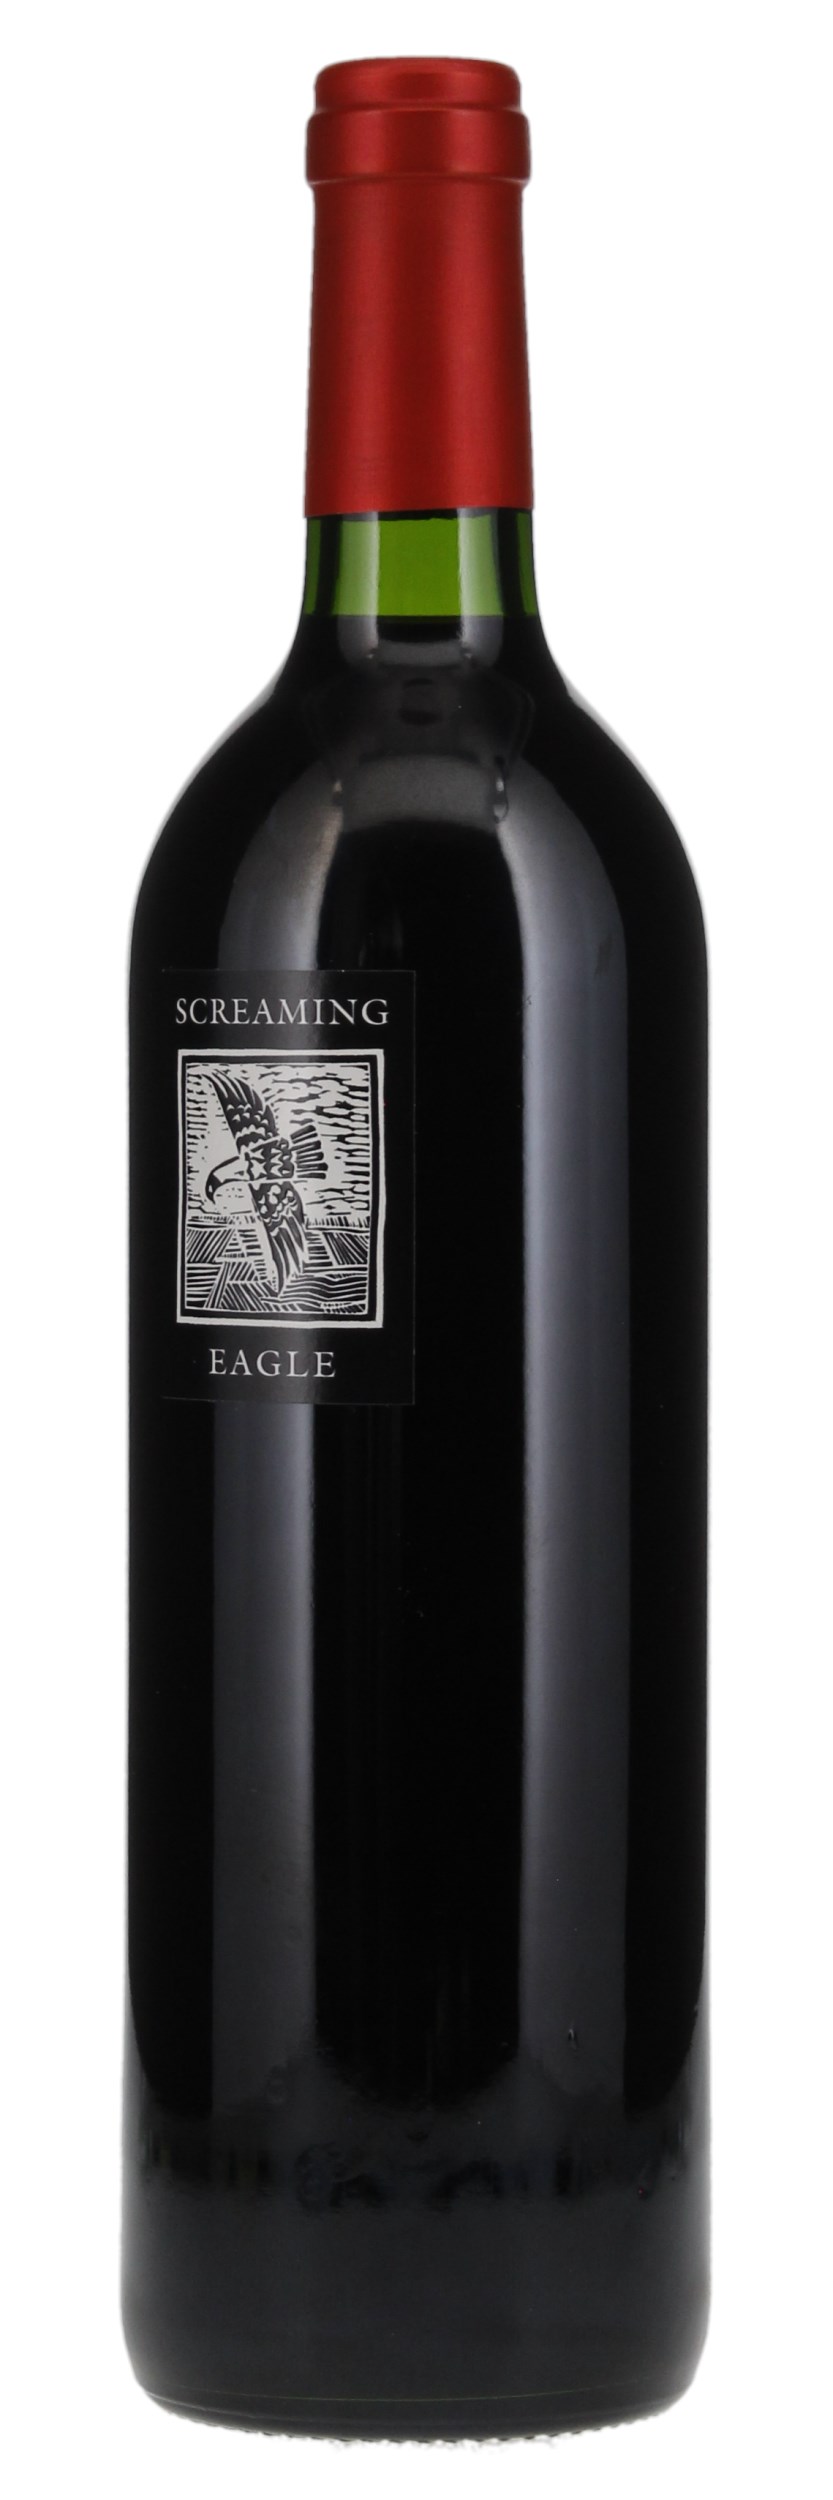 2002 Screaming Eagle Cabernet Sauvignon, 750ml